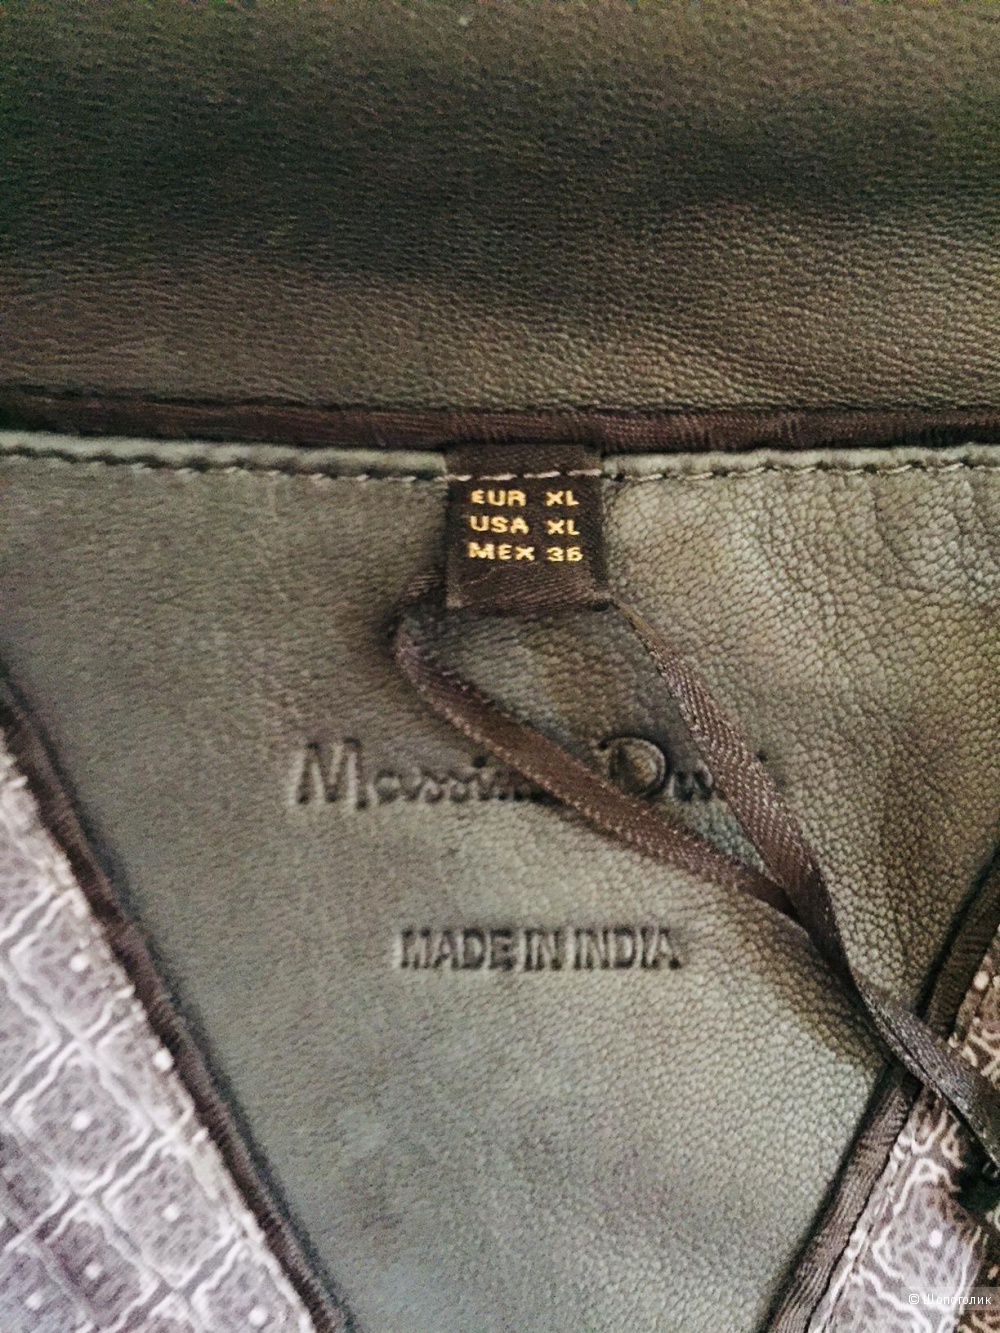 Кожаная куртка Massimo Dutti, р. XL